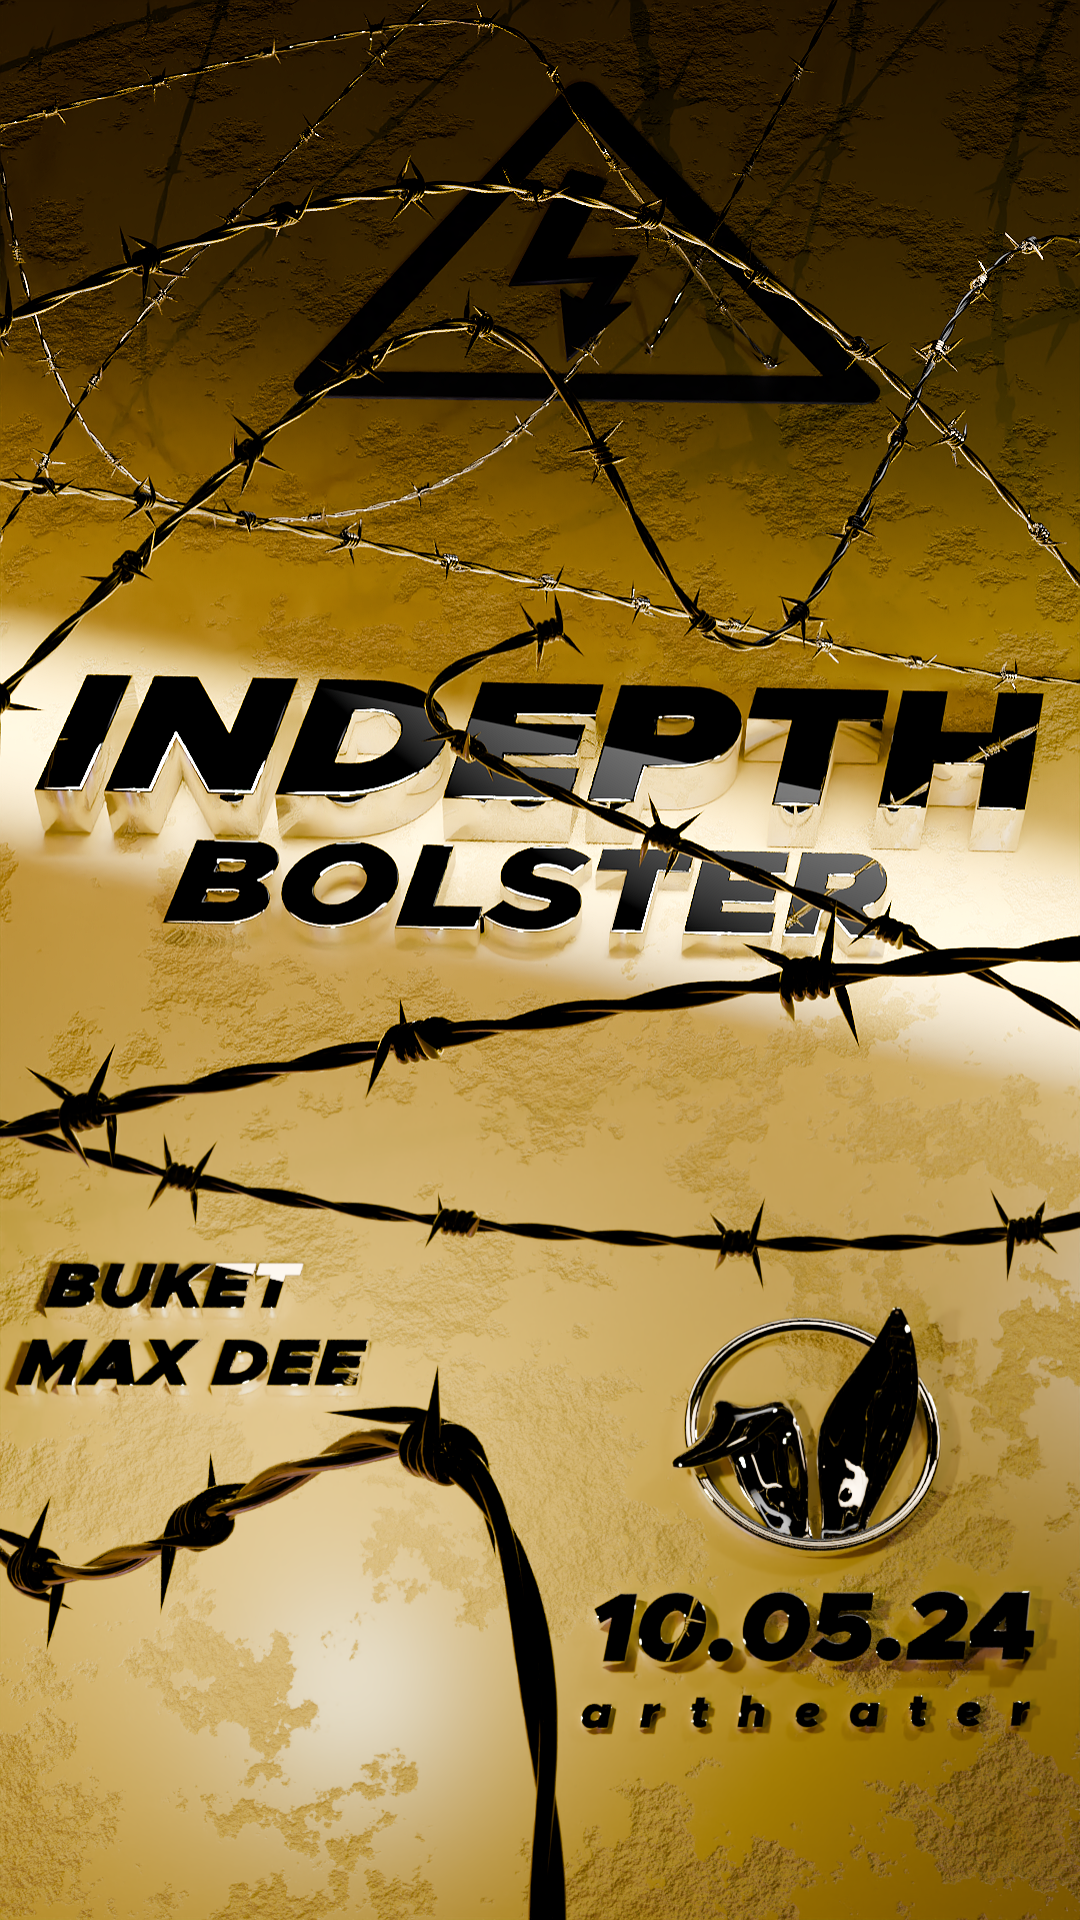 Hasenbau w/Indepth & Bolster - フライヤー表